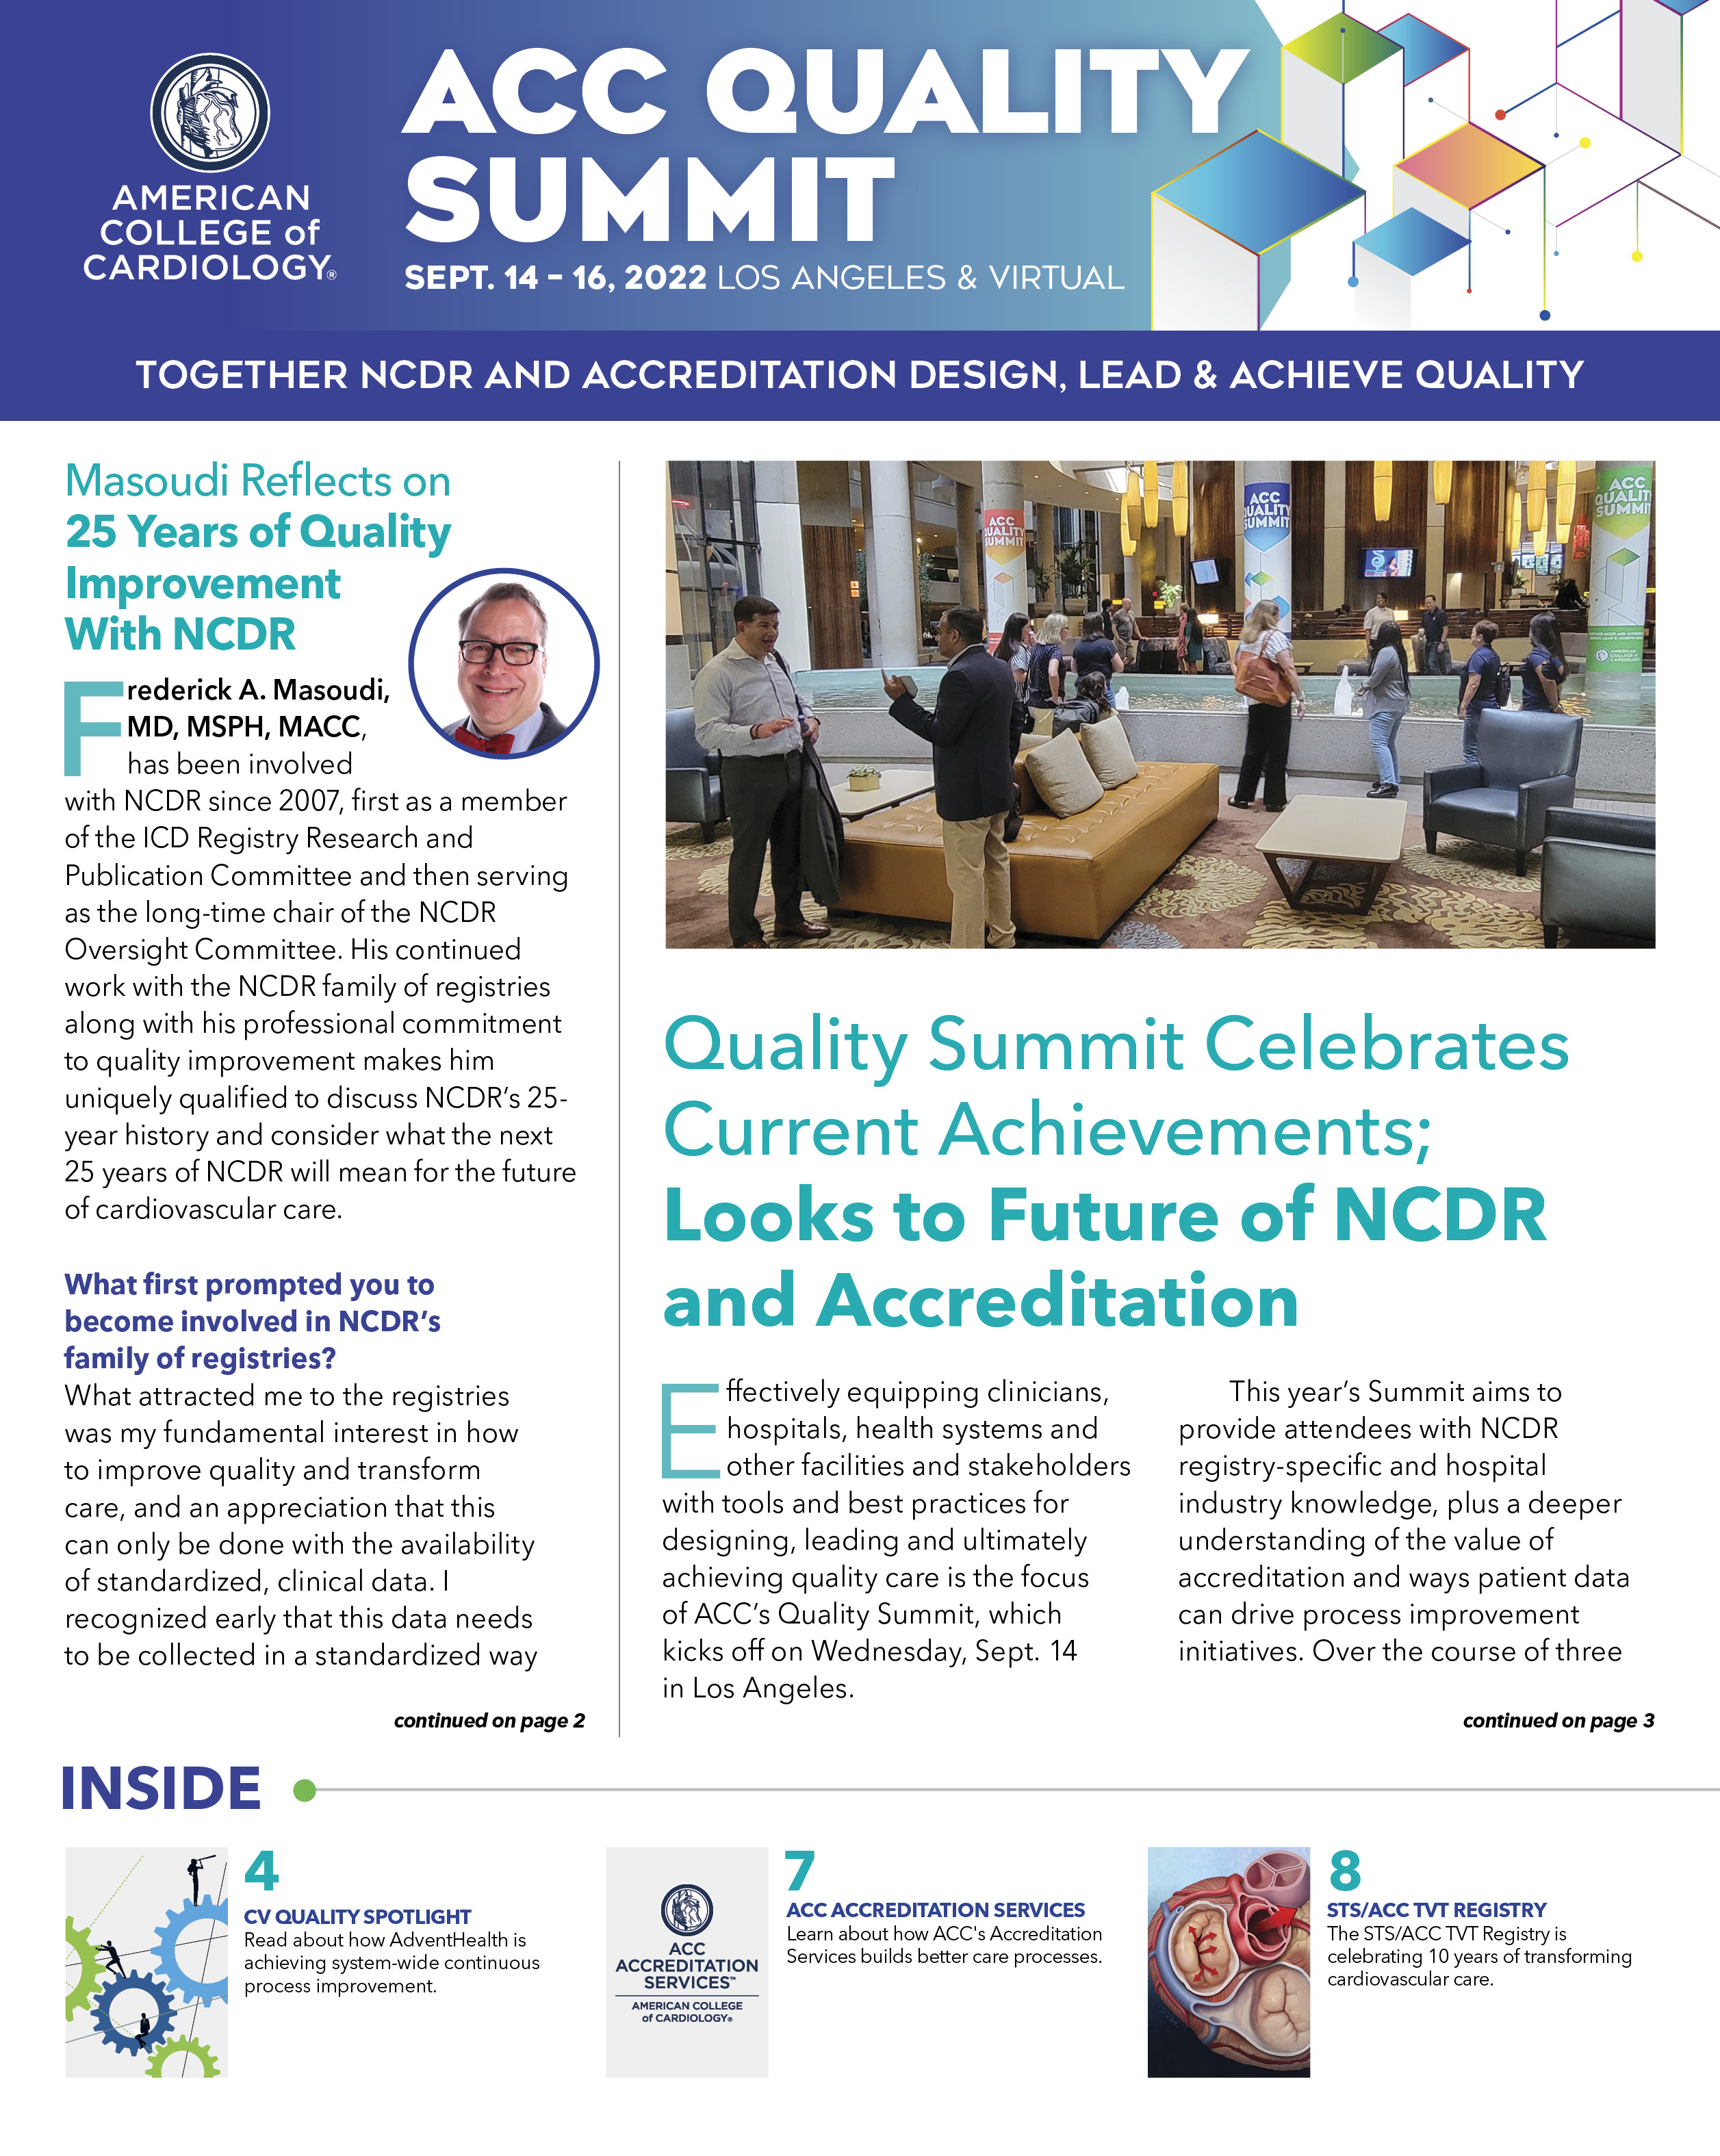 ACC Quality Summit digital newspaper